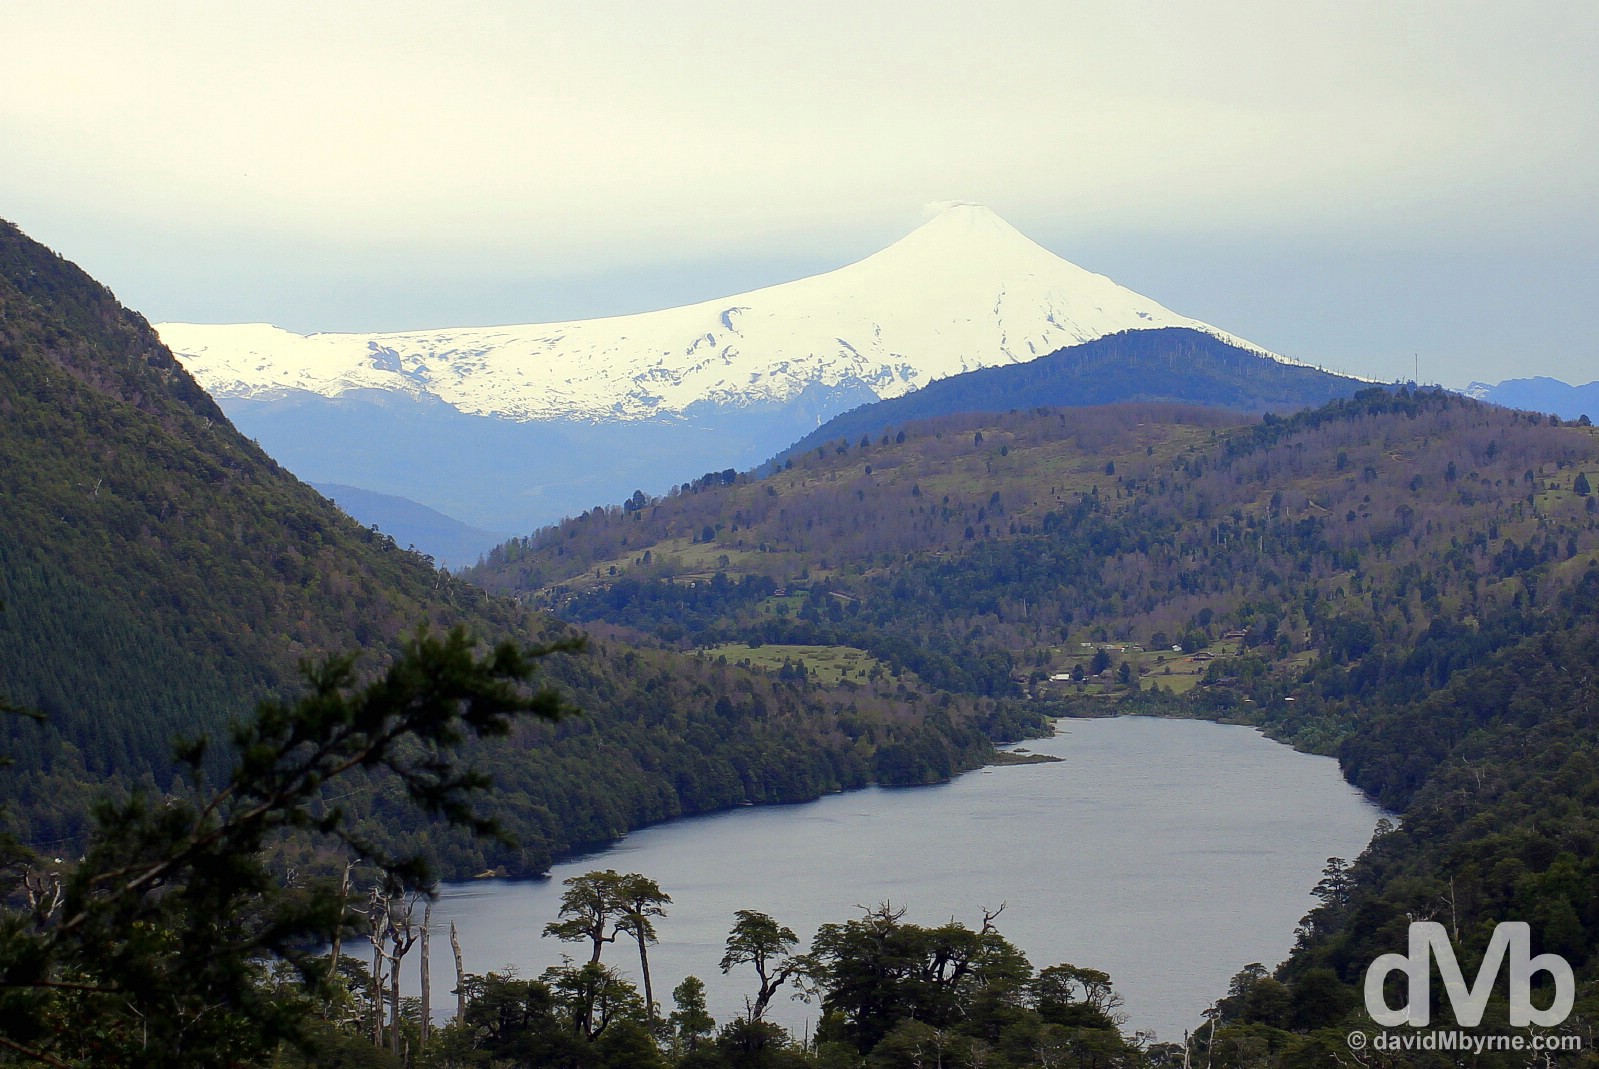 Scenery in Parque Nacional Huerquehue, Lake District, Chile. October 12, 2015.